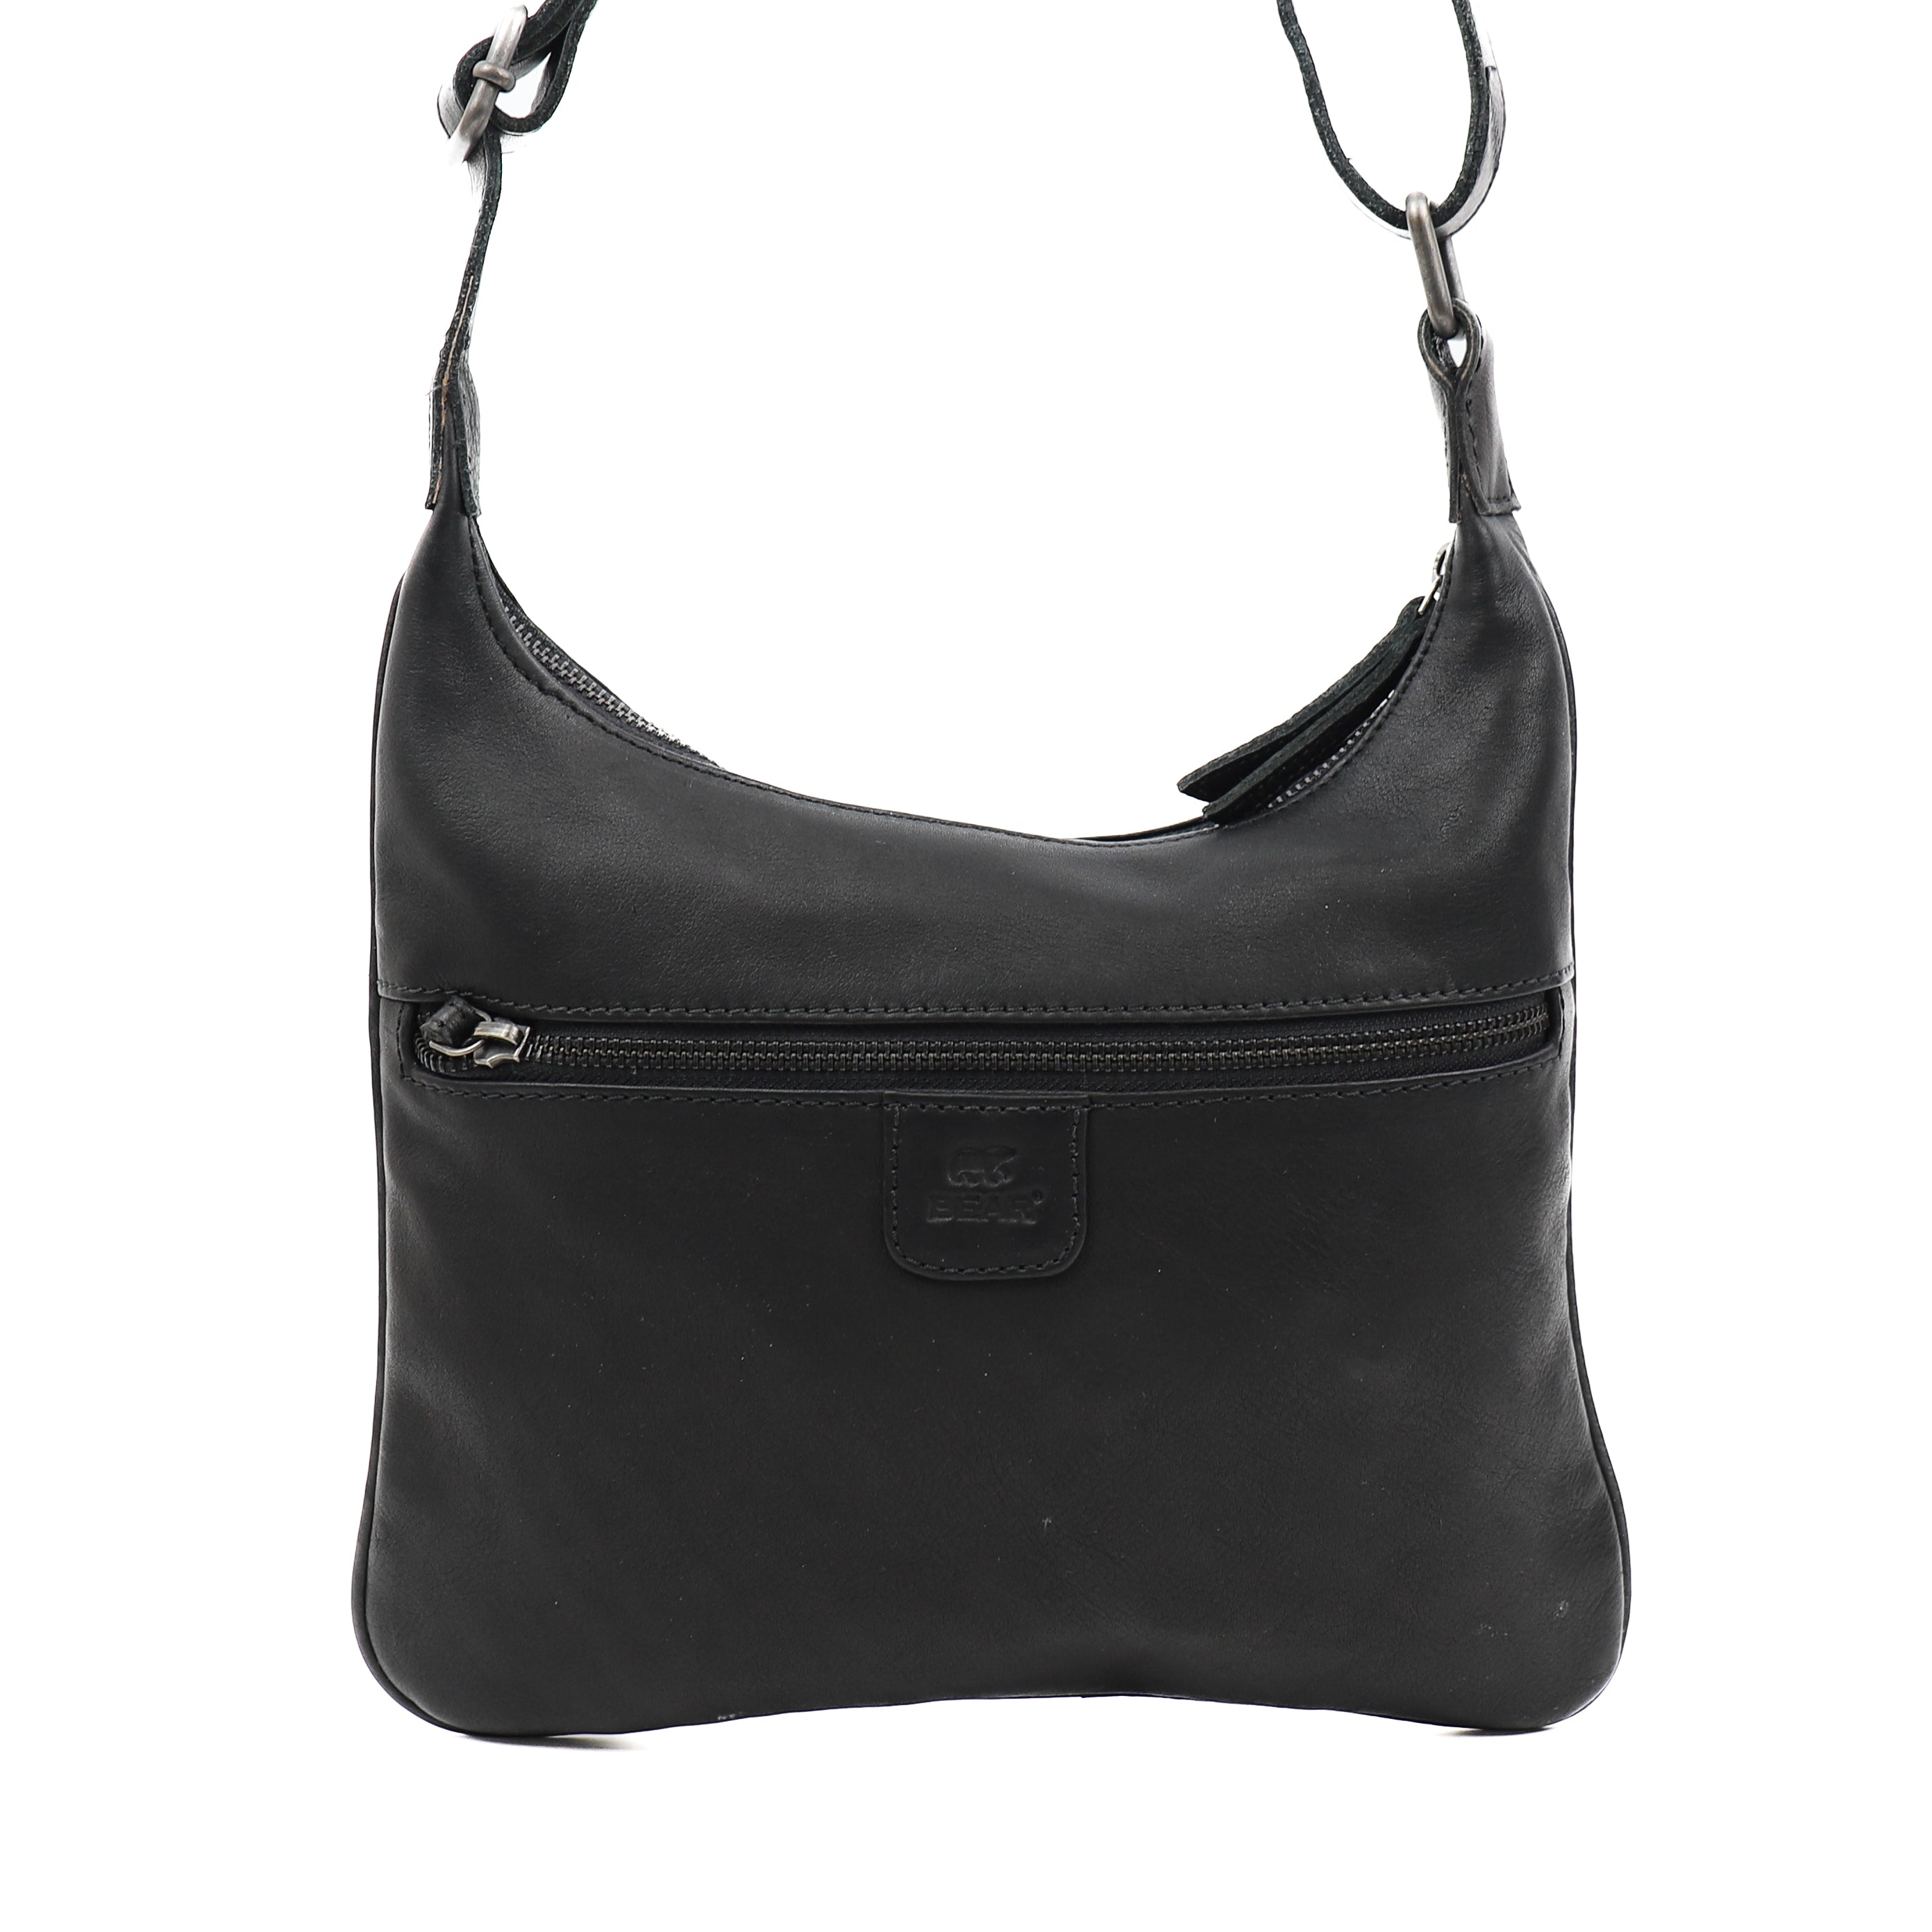 Shoulder bag 'Tina' black